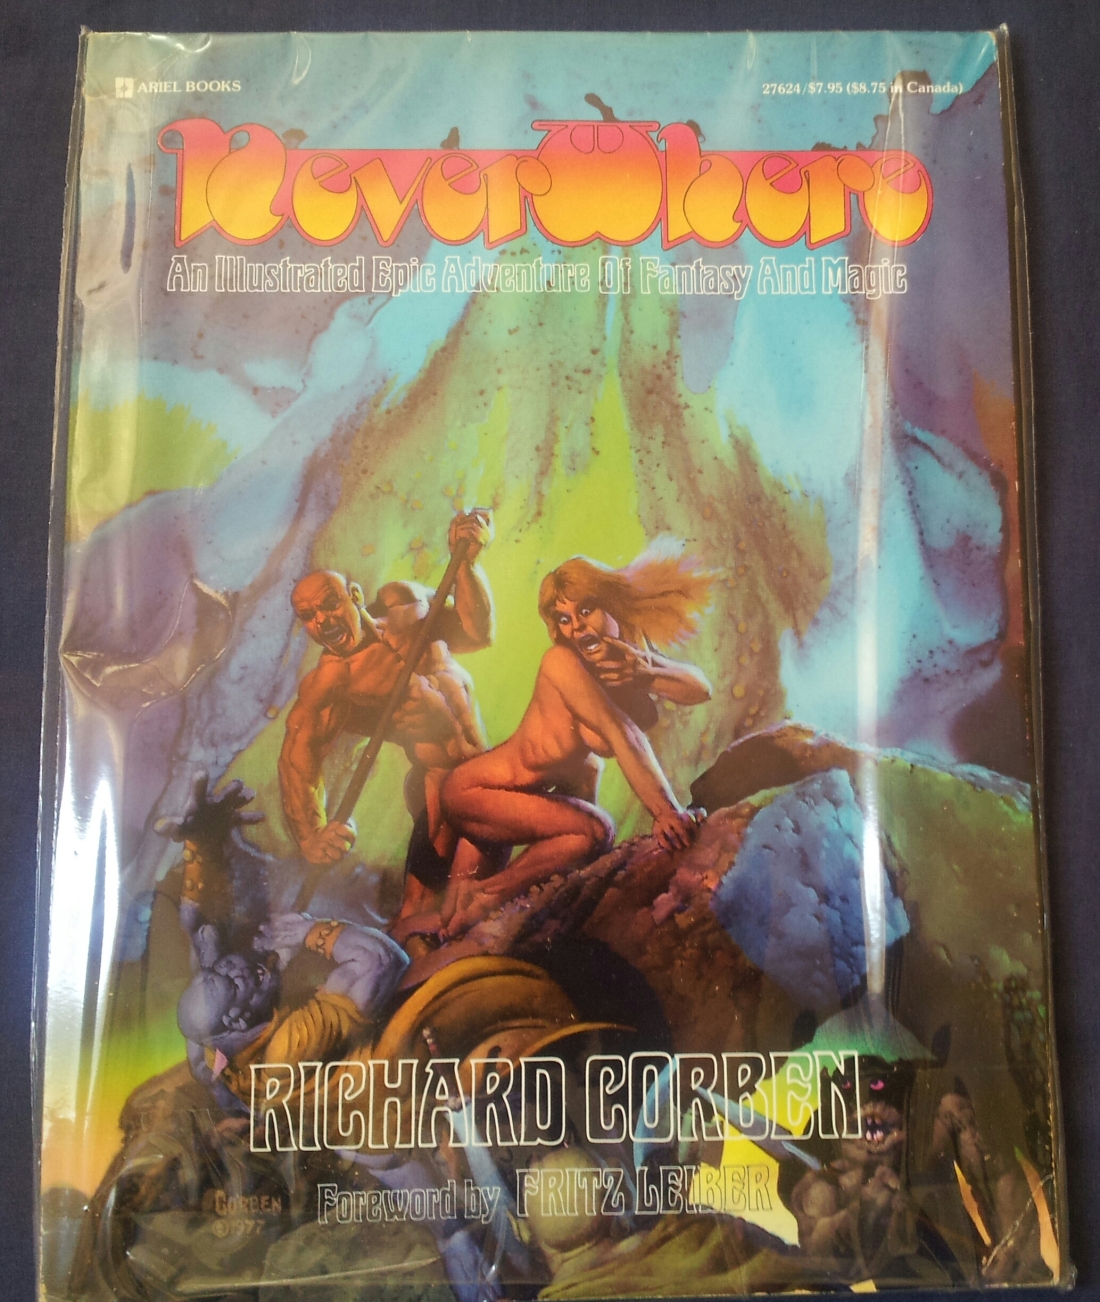 Recent Comic Purchases - Richard Corben's Neverwhere